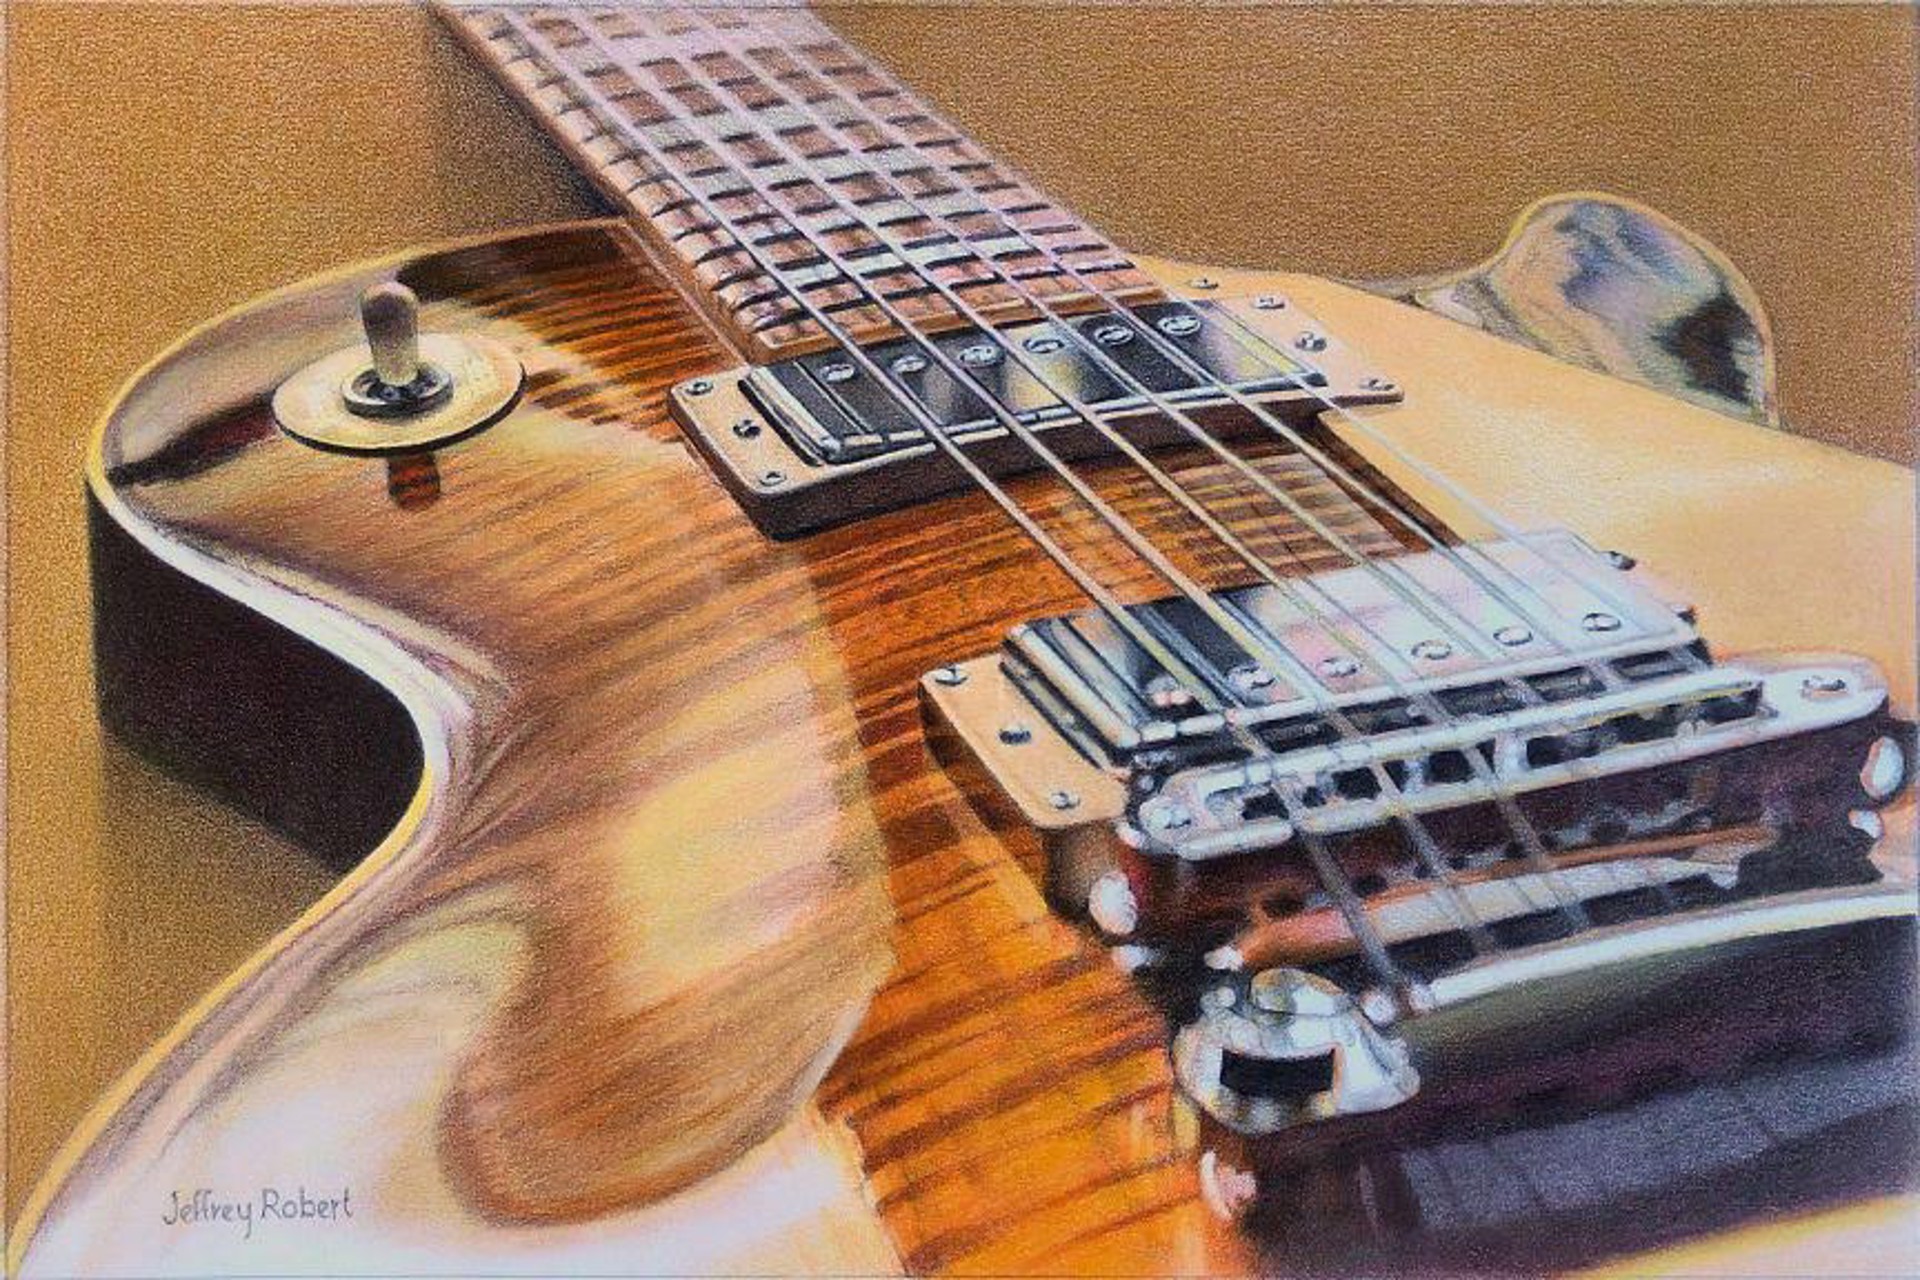 Les Paul Gibson (Guitar) by Jeffrey Robert